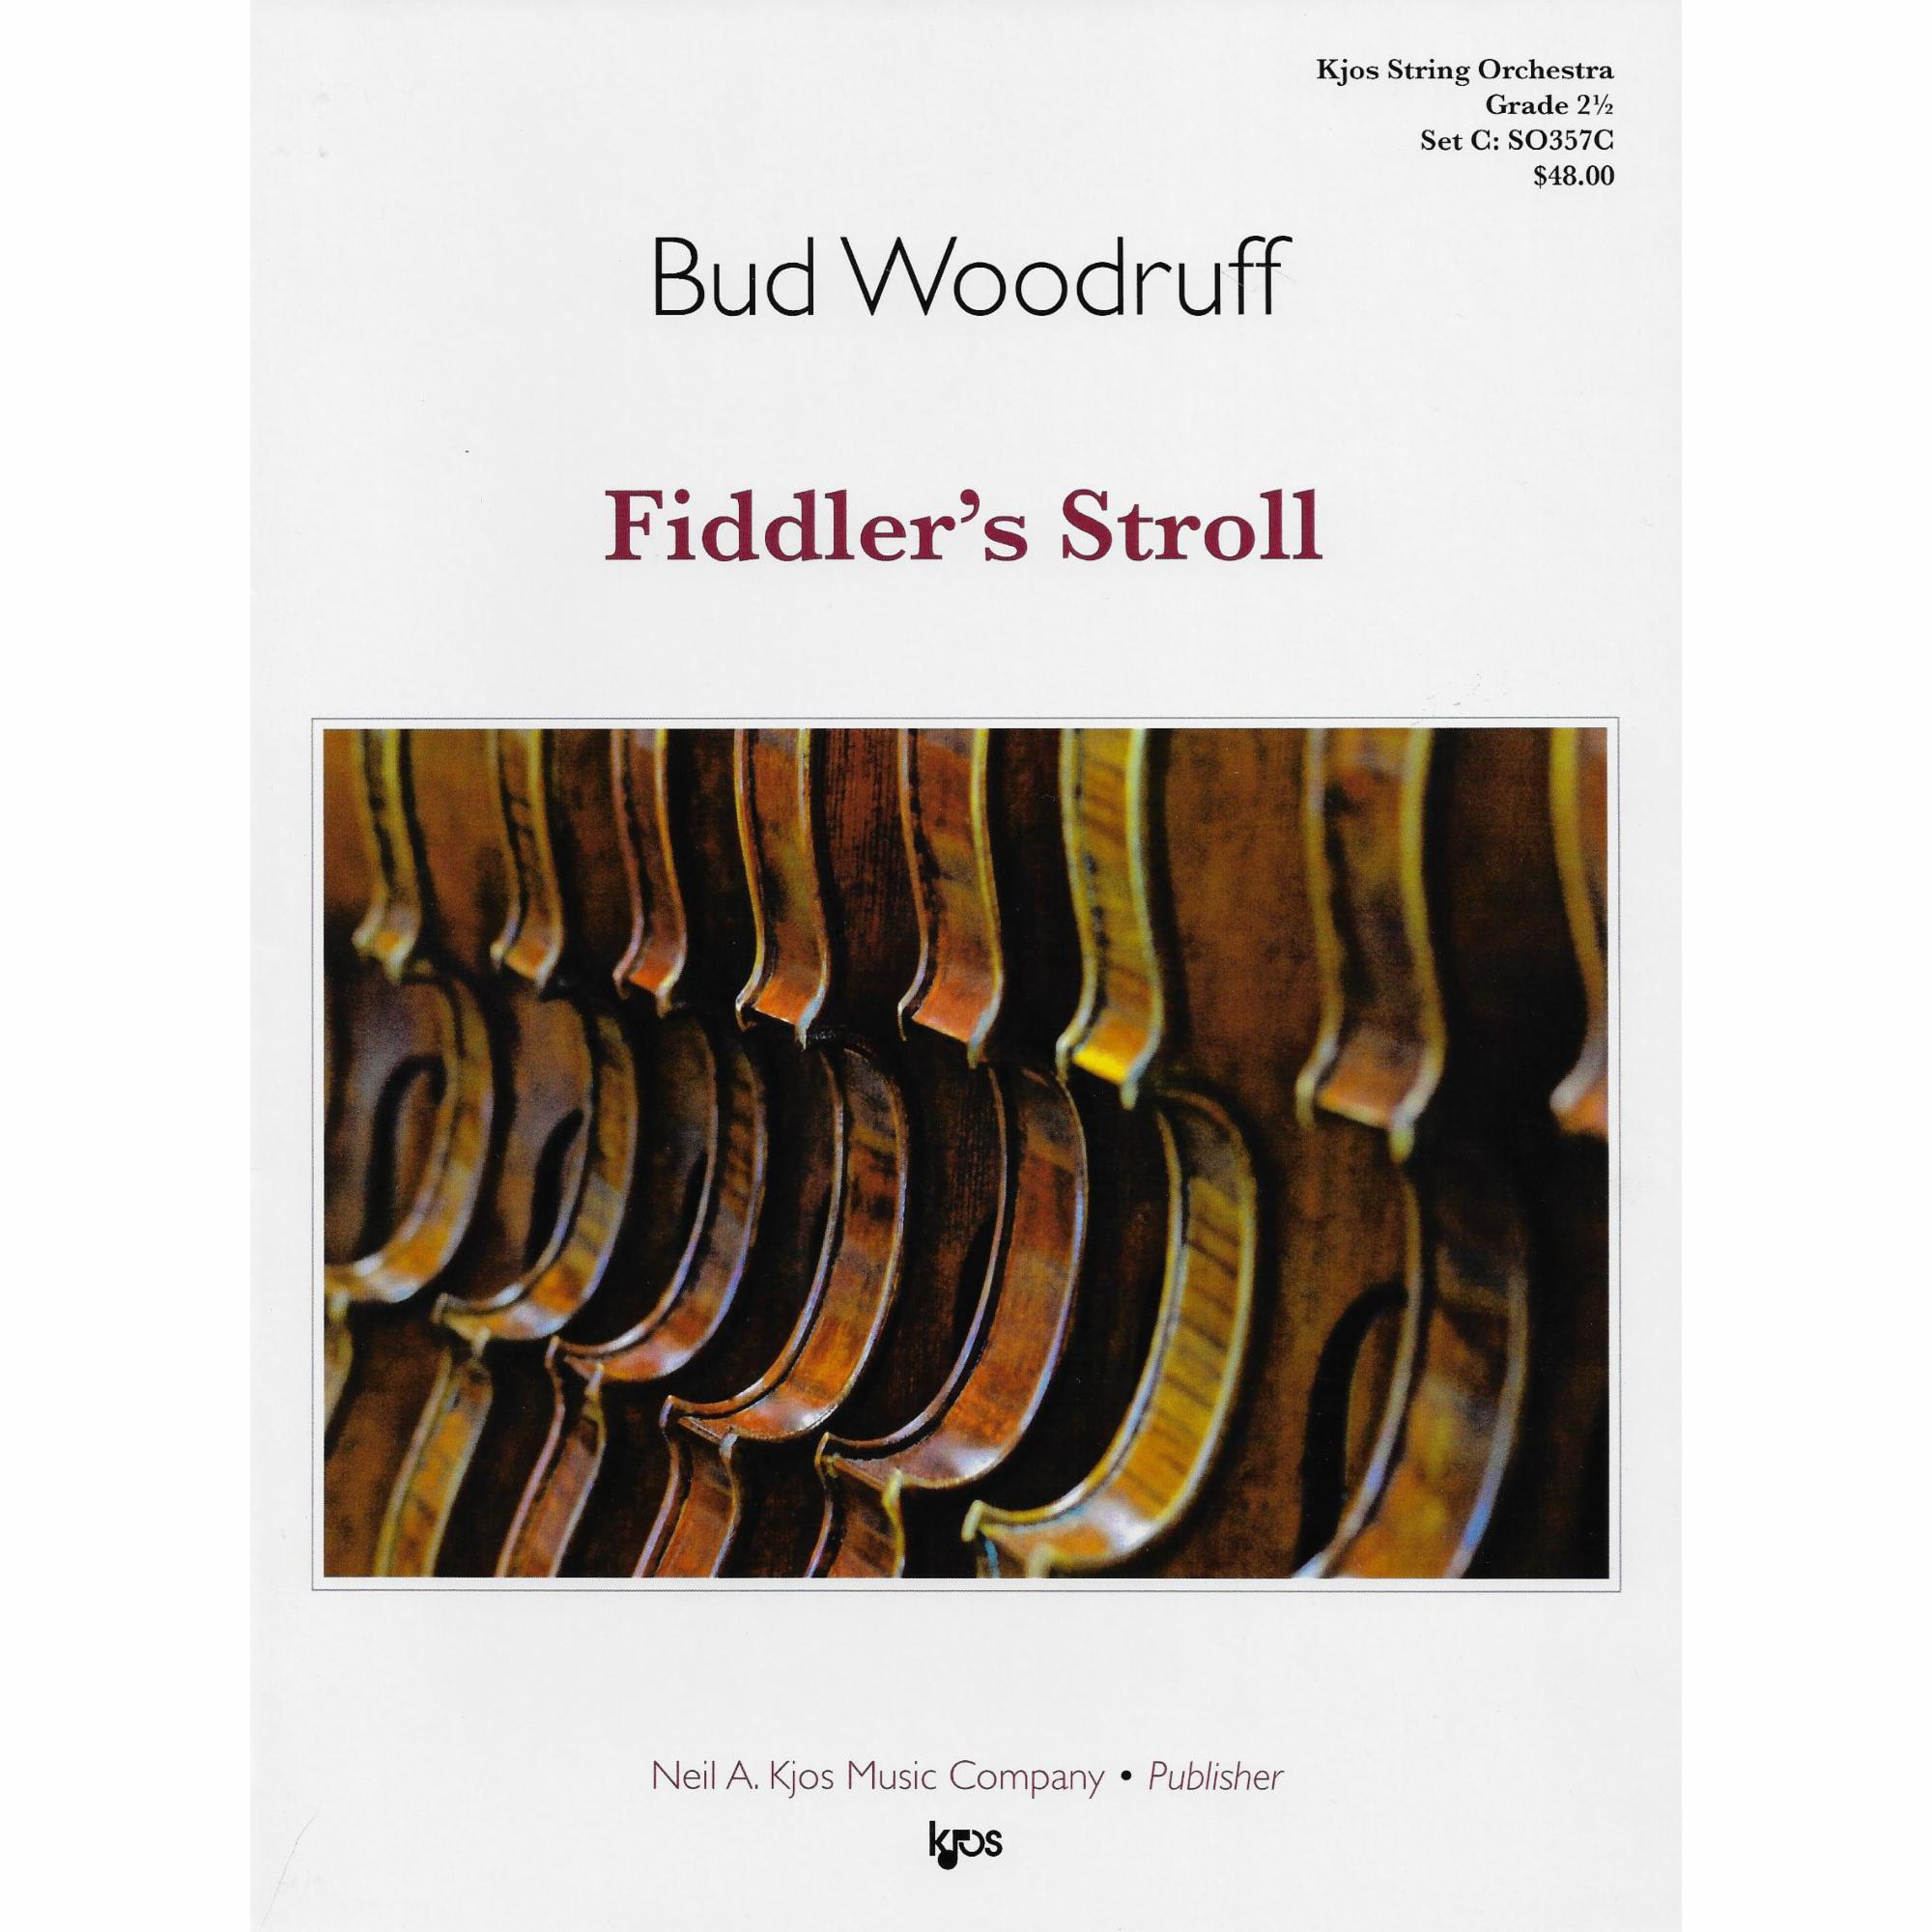 Fiddler's Stroll for String Orchestra